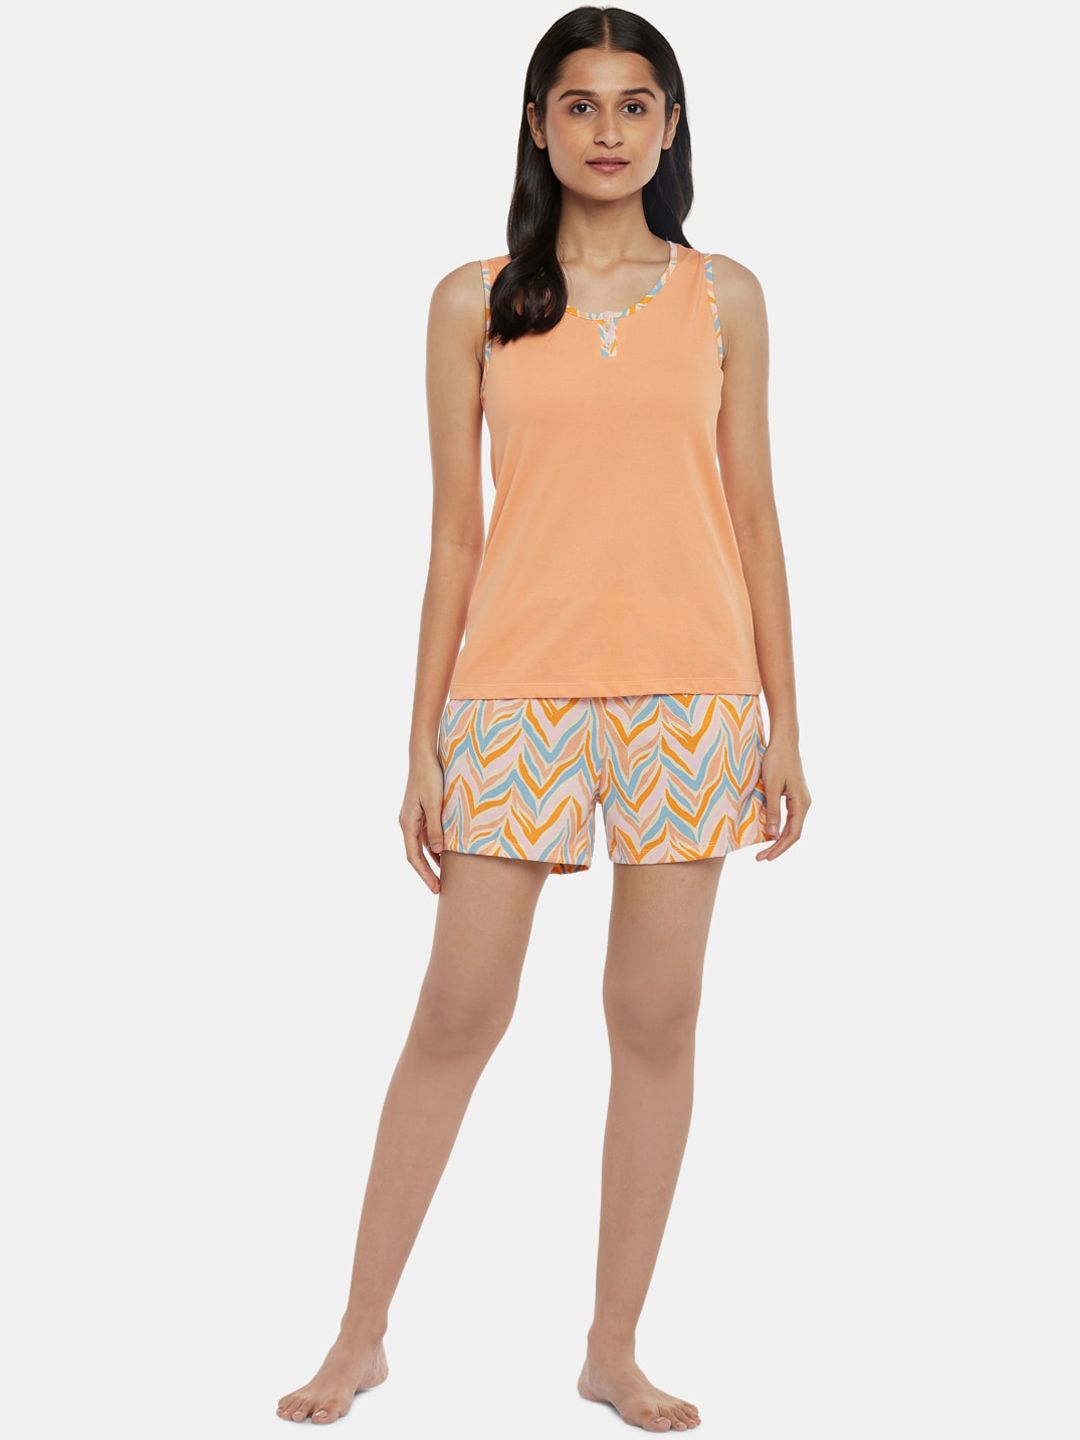 Dreamz by Pantaloons Women Orange & White Night suit Price in India